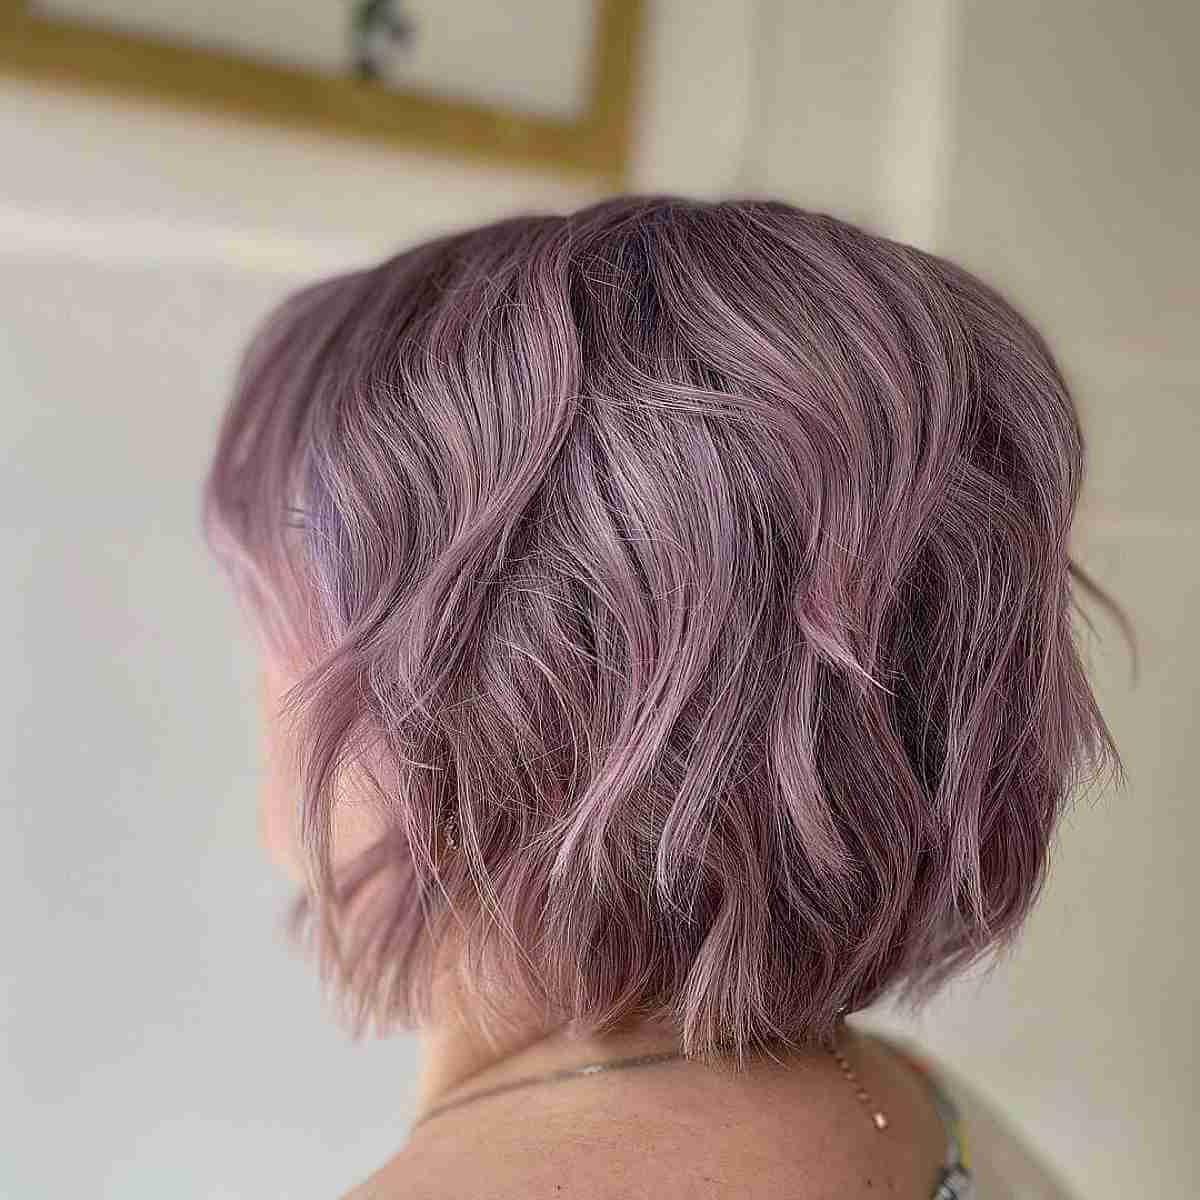 Razored Shaggy Layers on Short Purple Hair